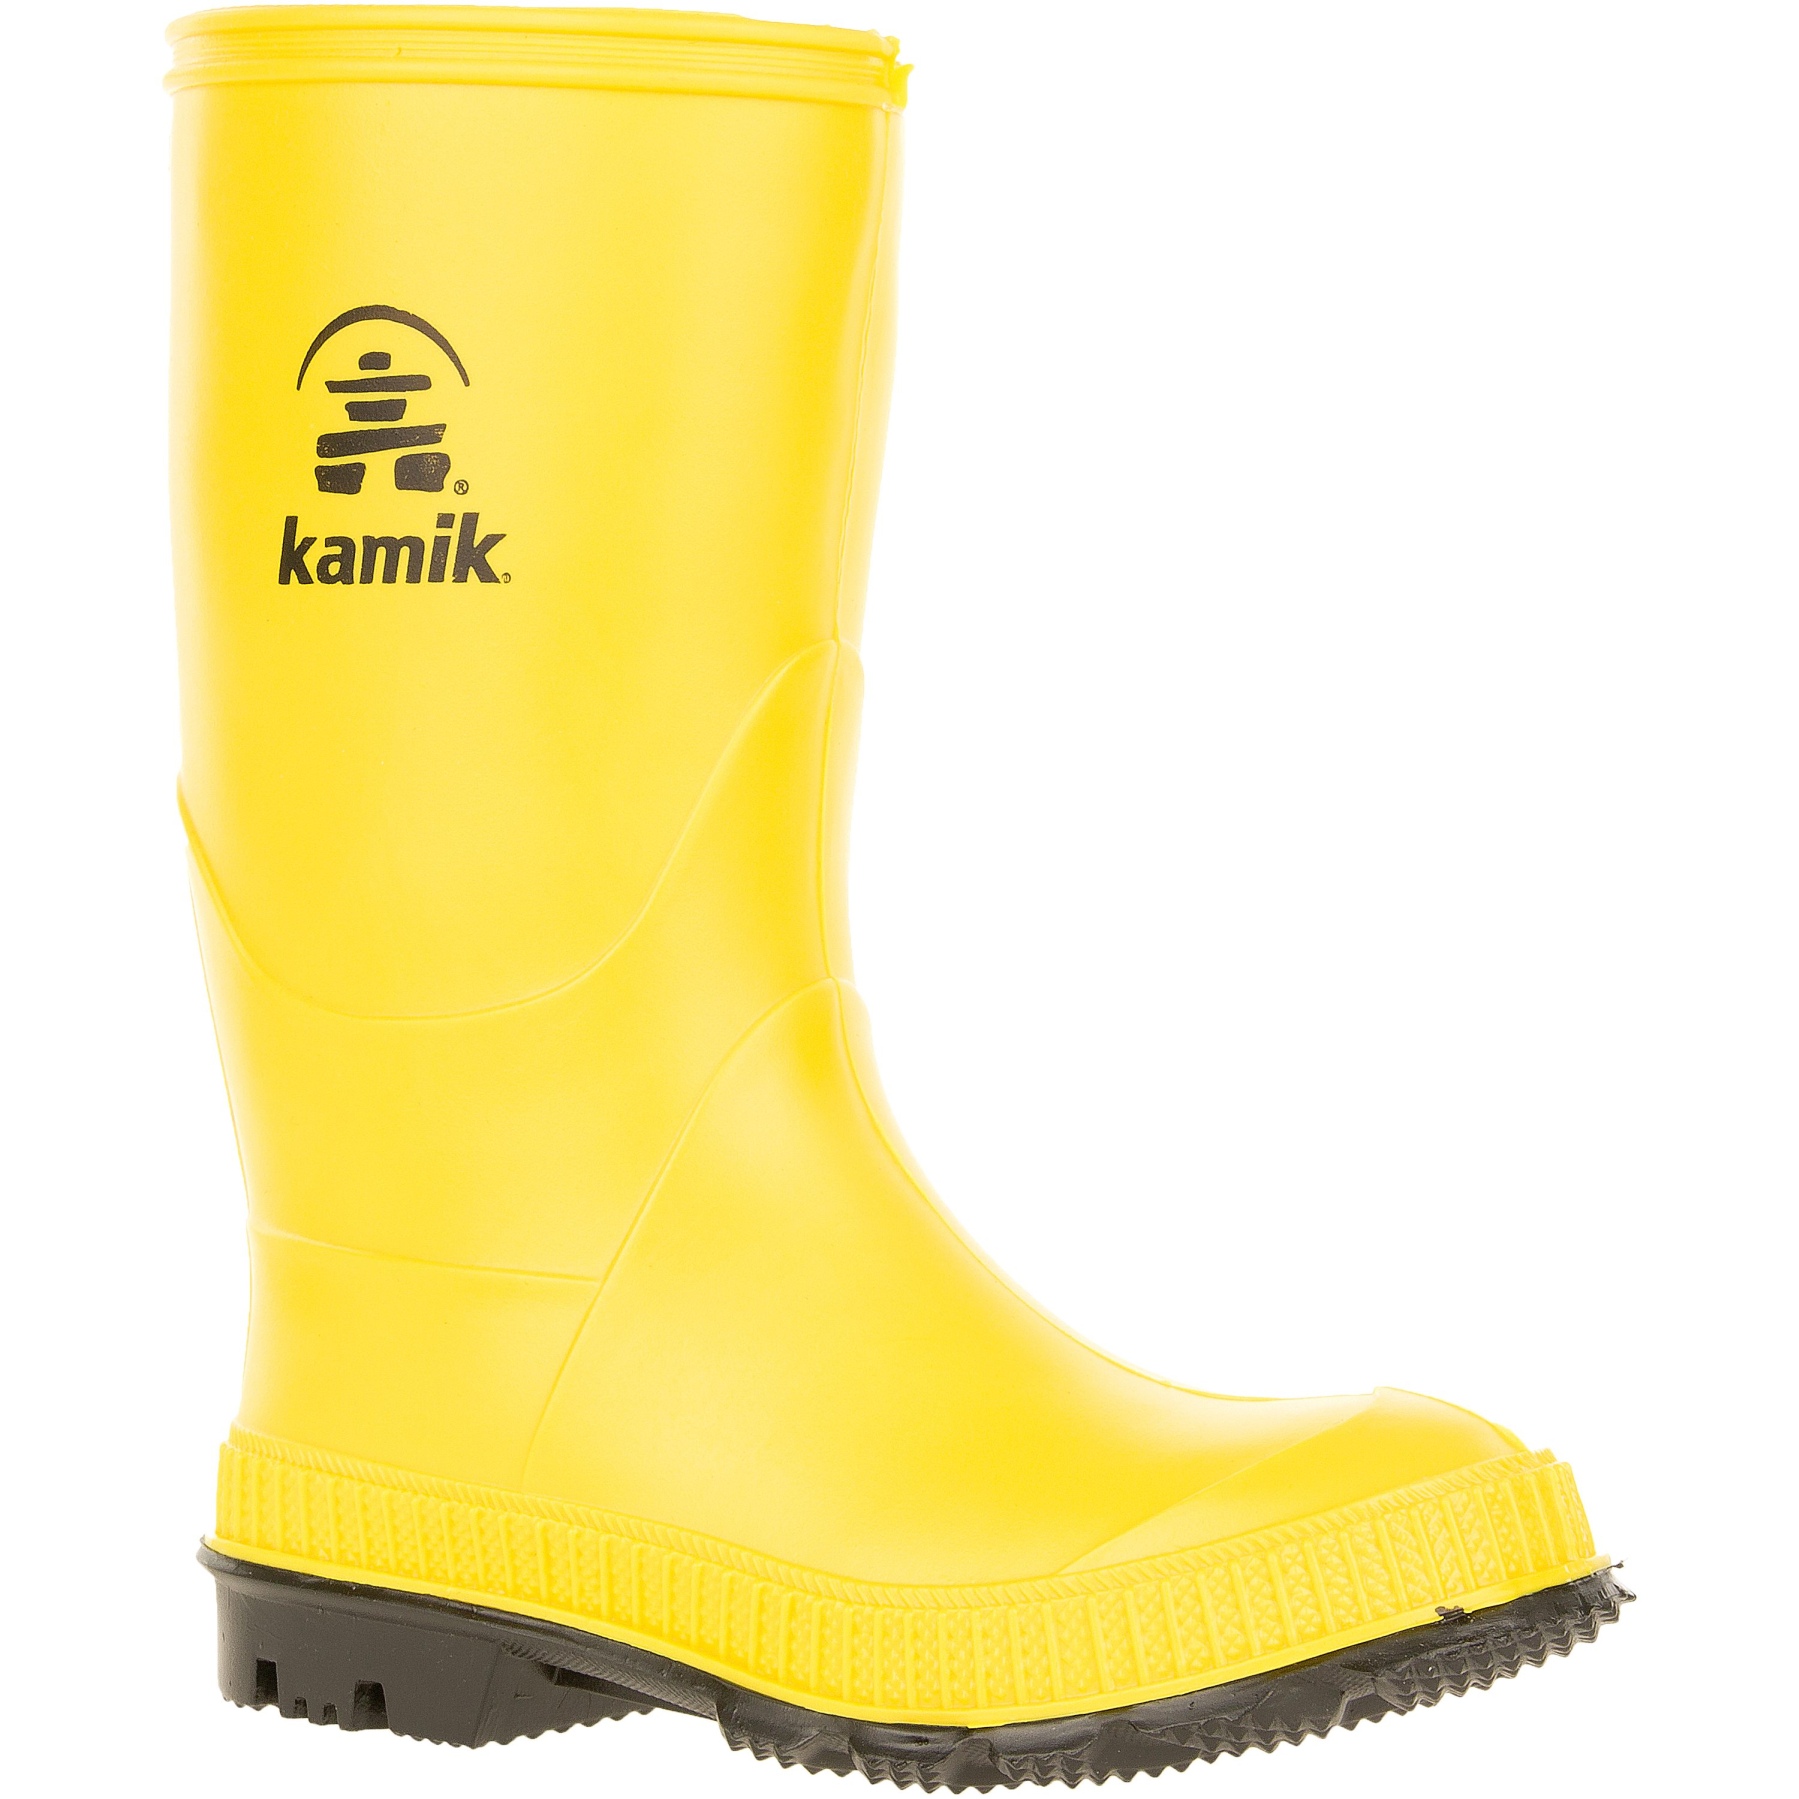 Productfoto van Kamik Stomp Kids Rubber Boots - Yellow Black